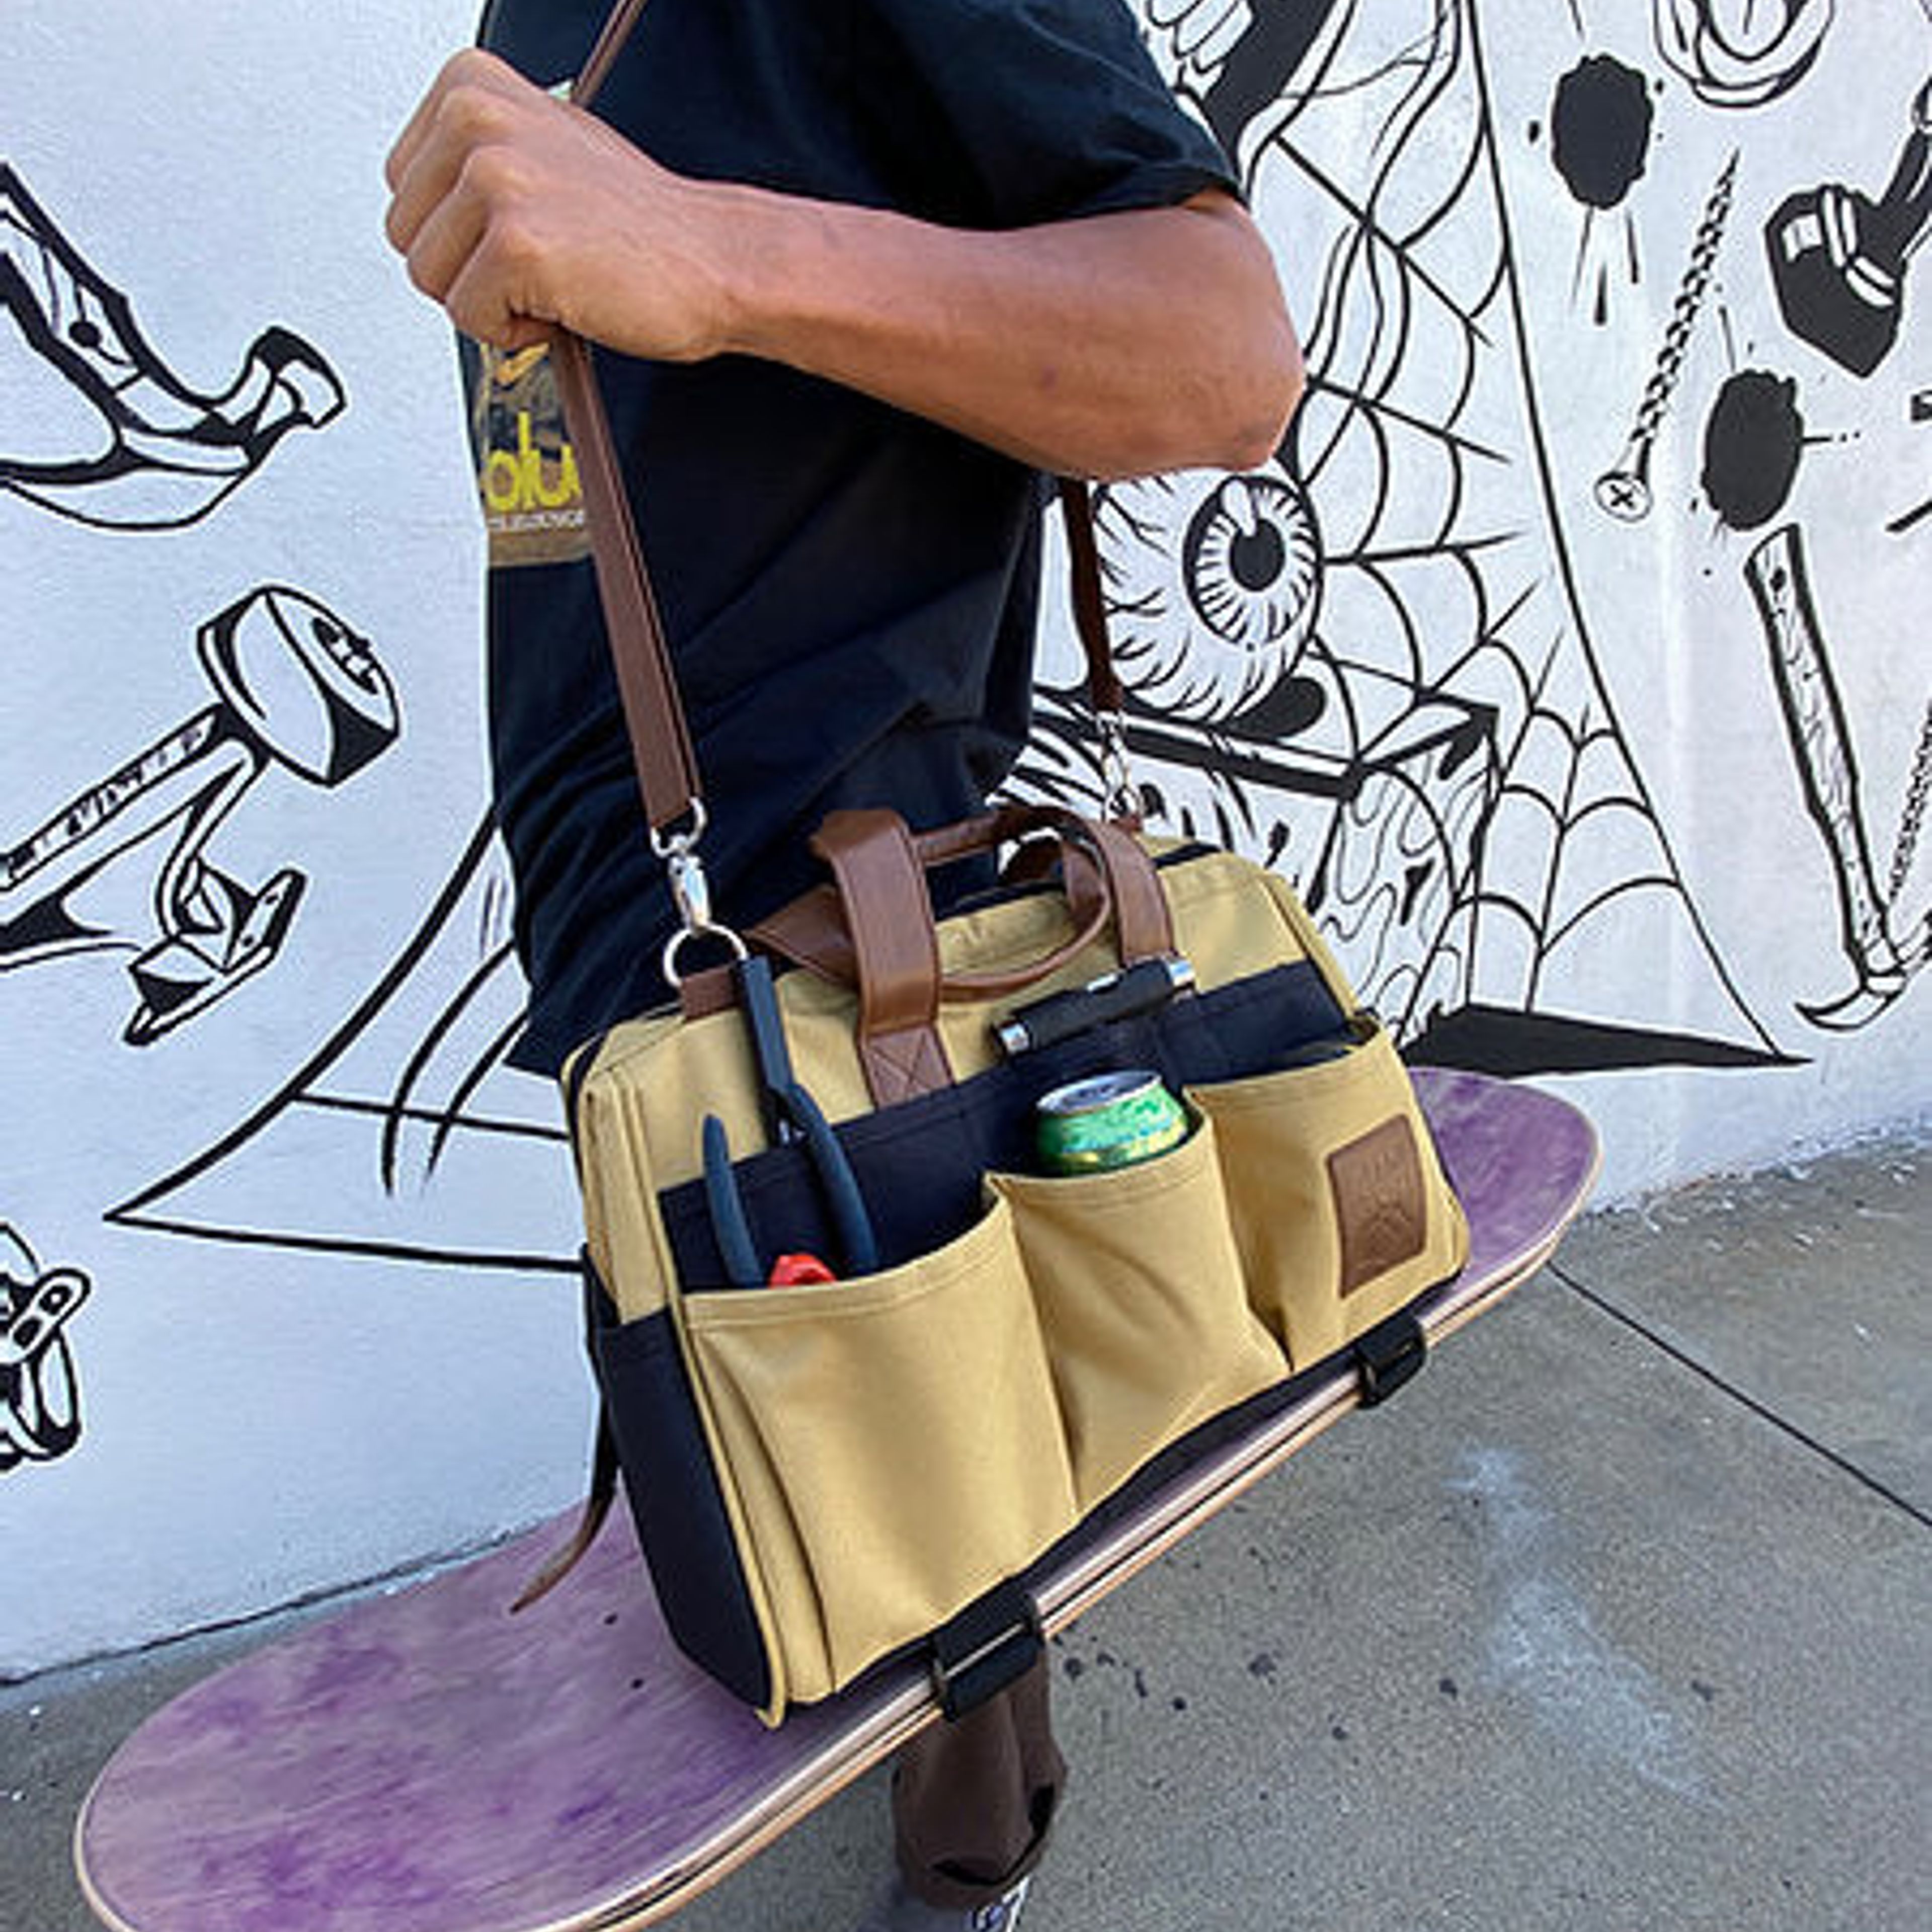 The Ultimate Tool/Skate Bag